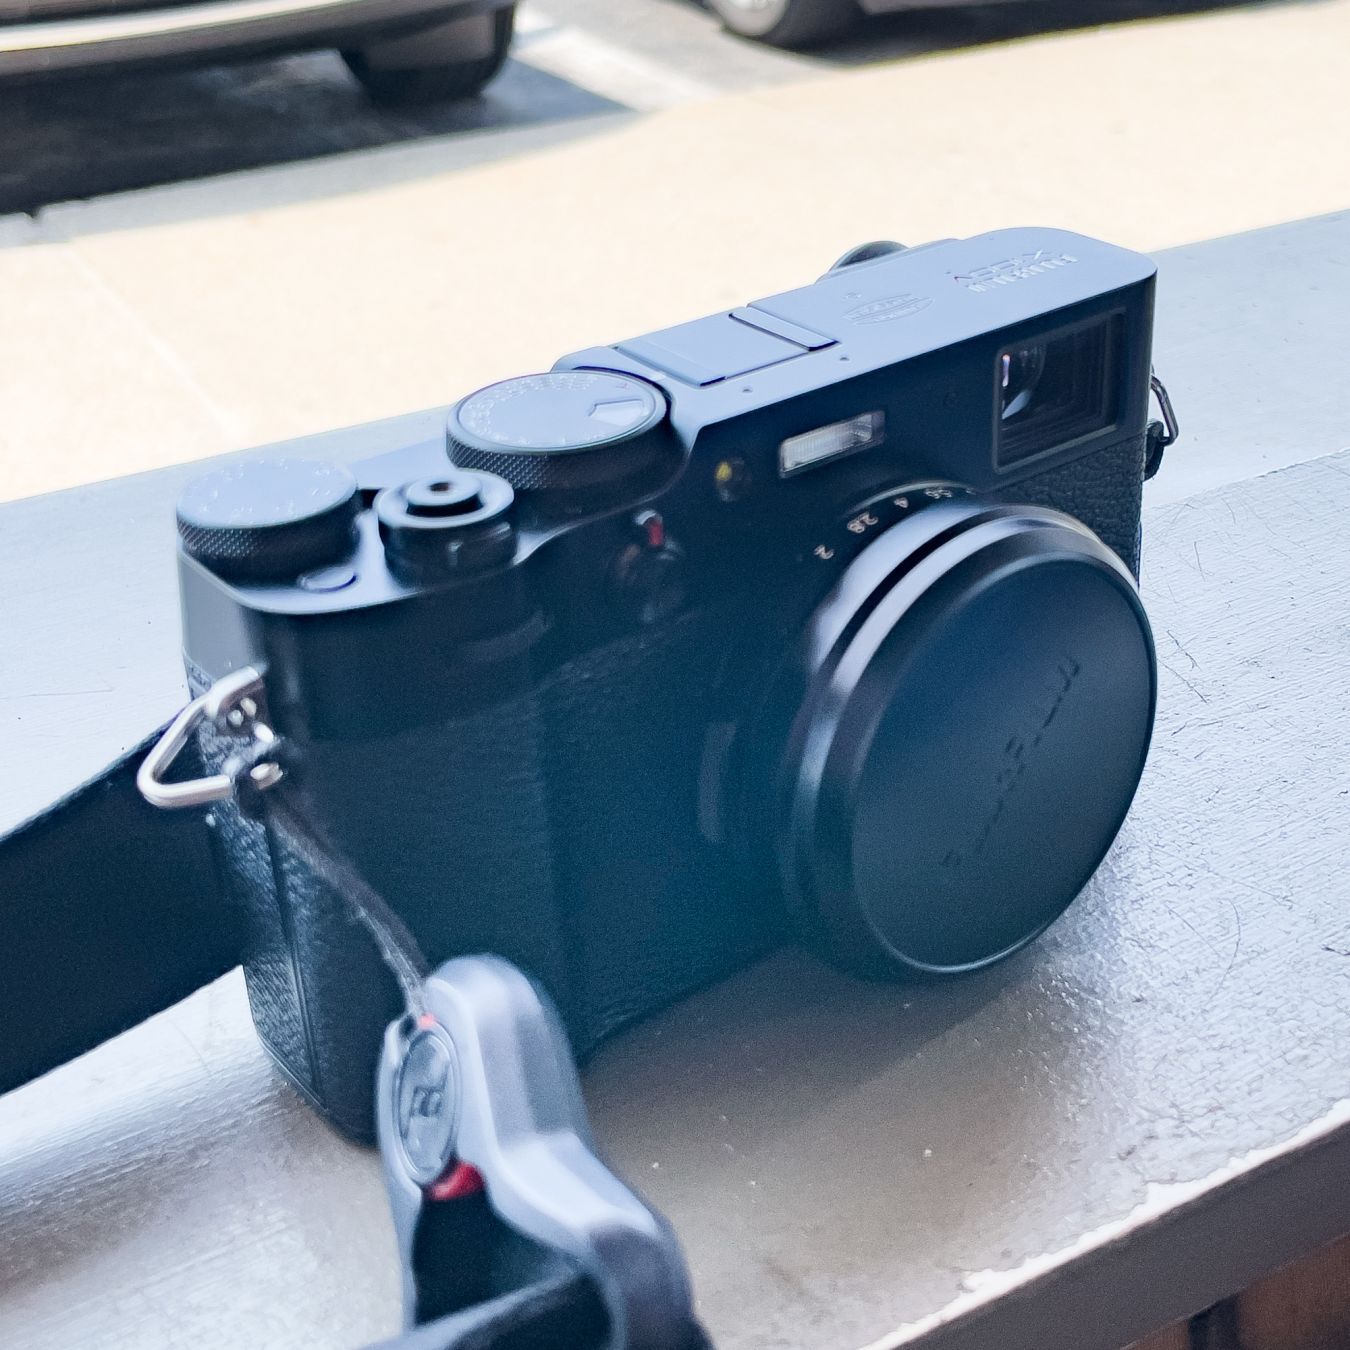 Fuji X100V camera with lens cap and strap